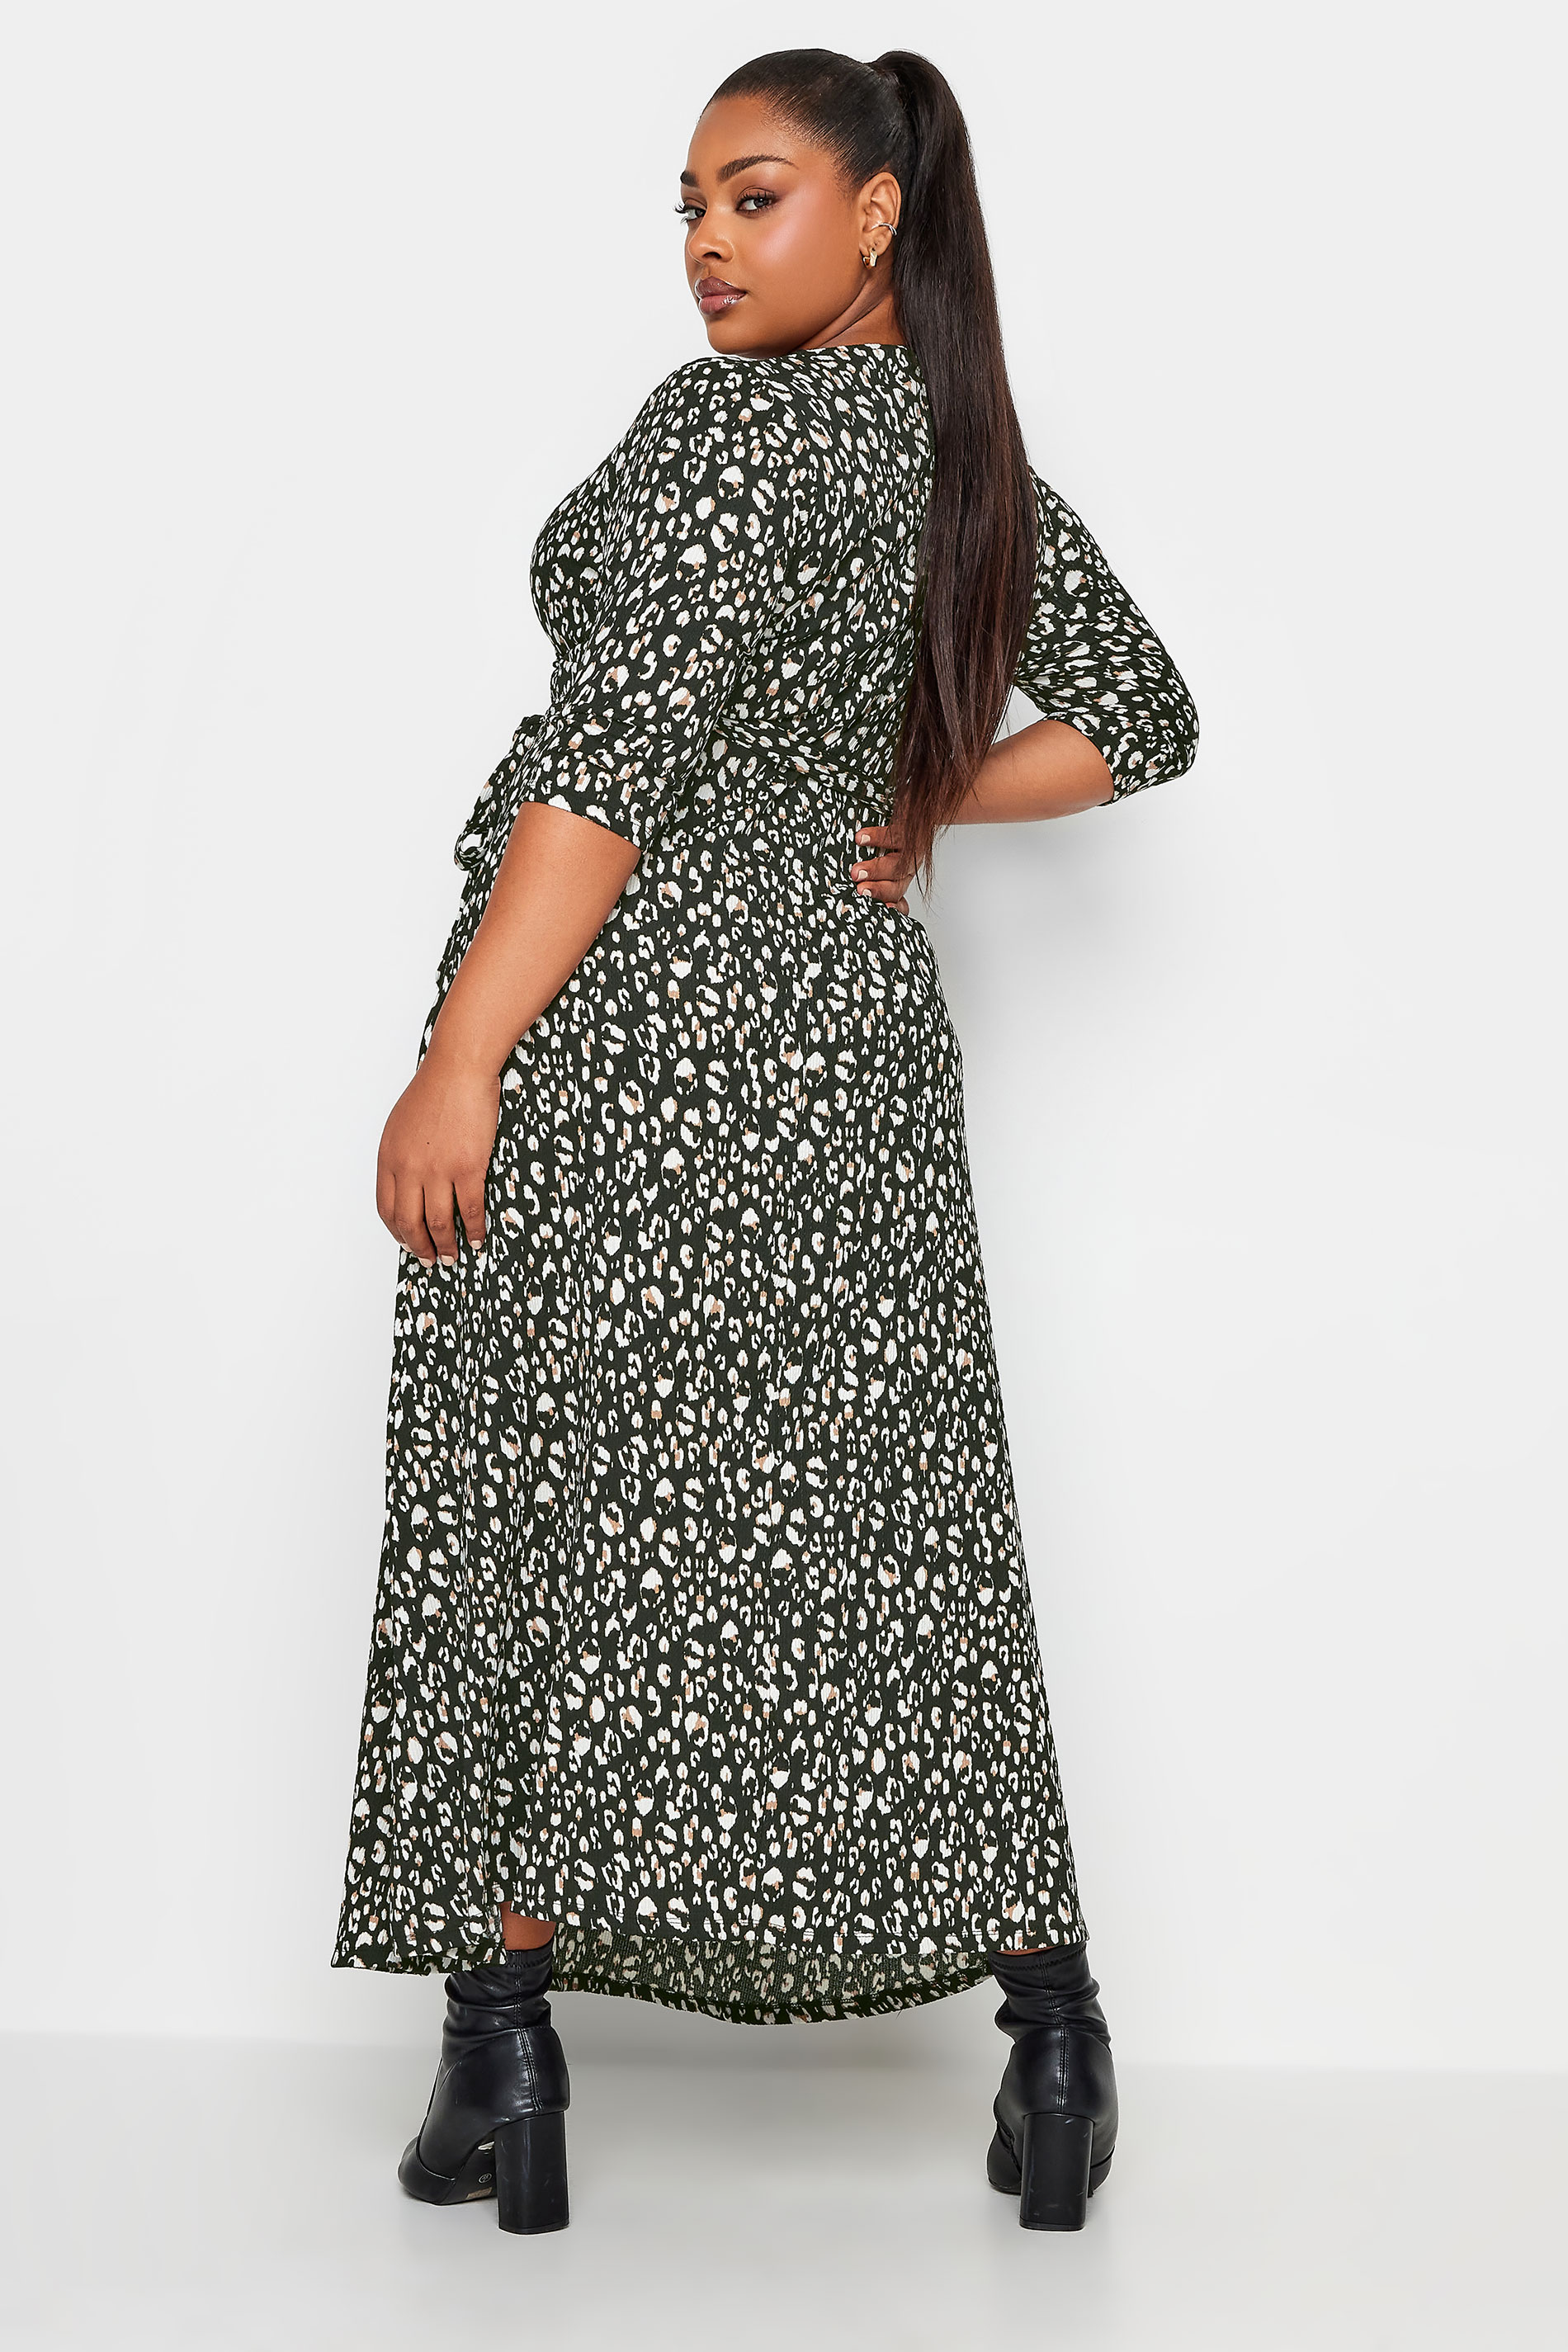 YOURS Curve Black Leopard Print Wrap Maxi Dress | Yours Clothing 3